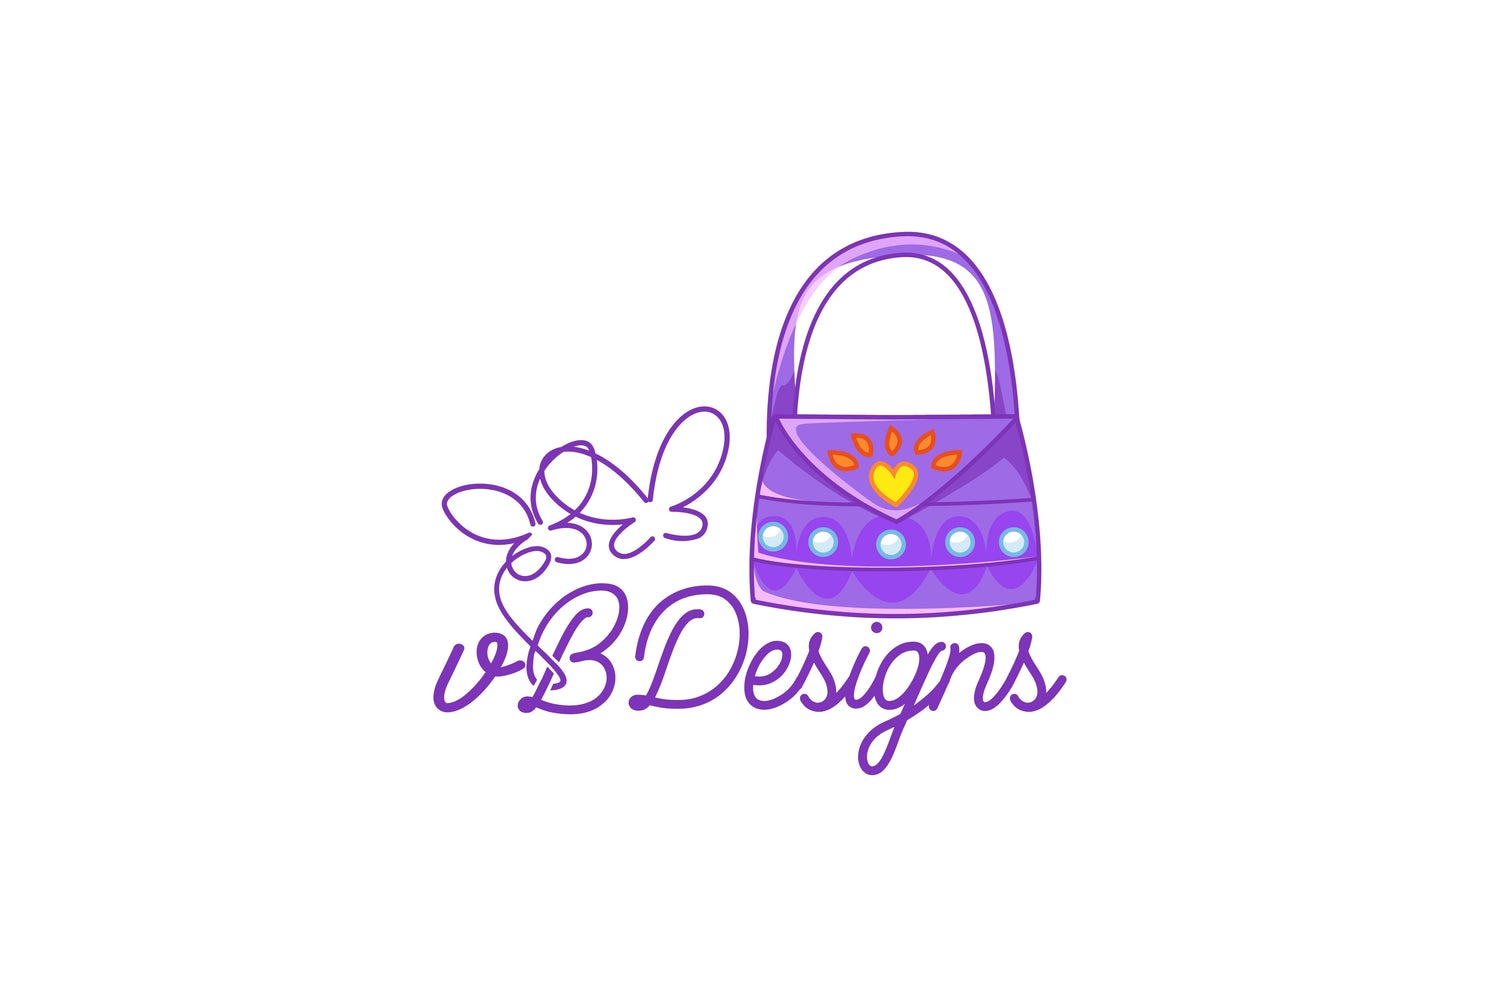 vb-designs-by-emma